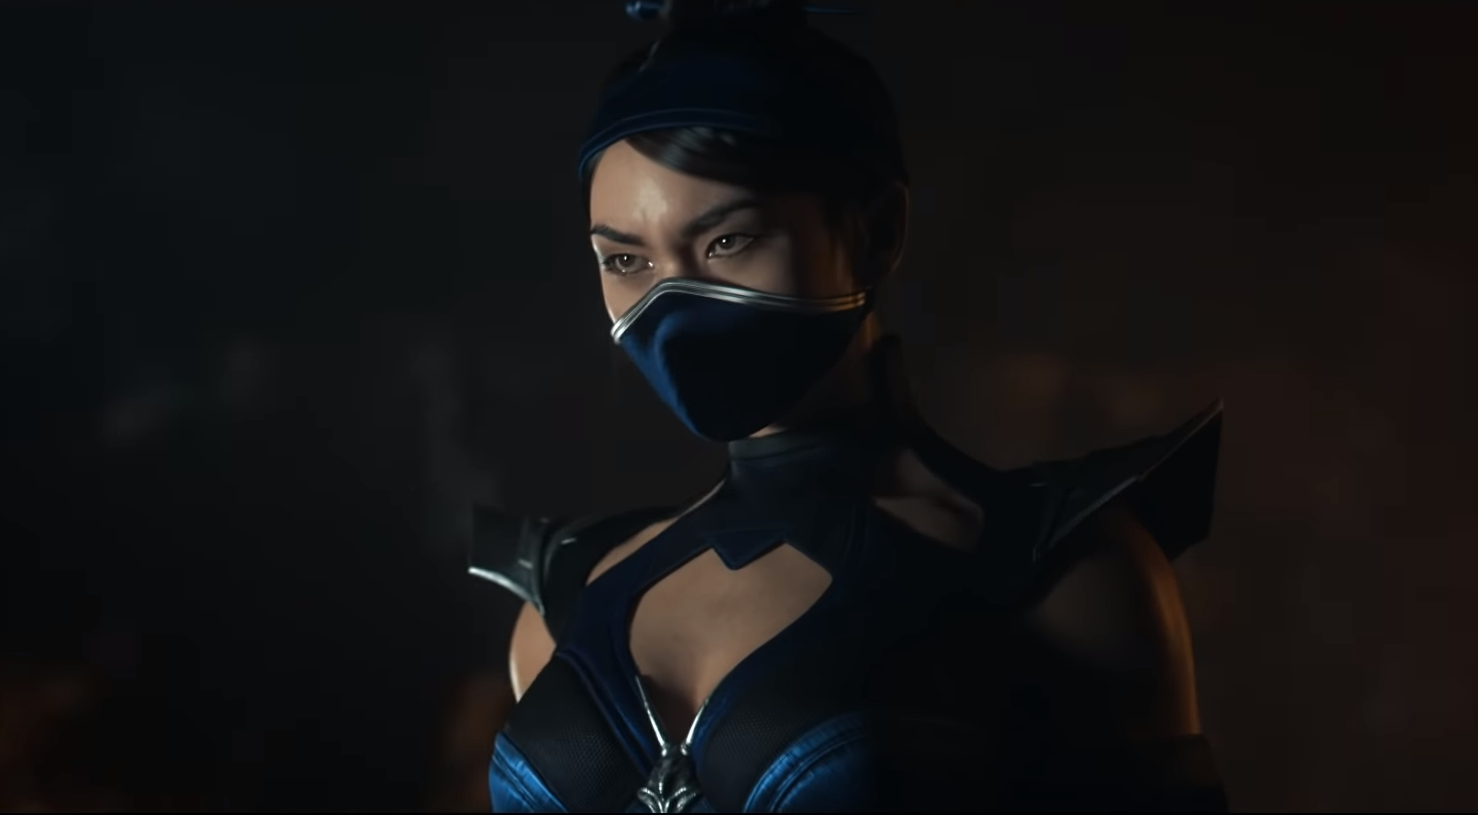 Mortal Kombat 11 Shao Kahn, Switch trailers drop